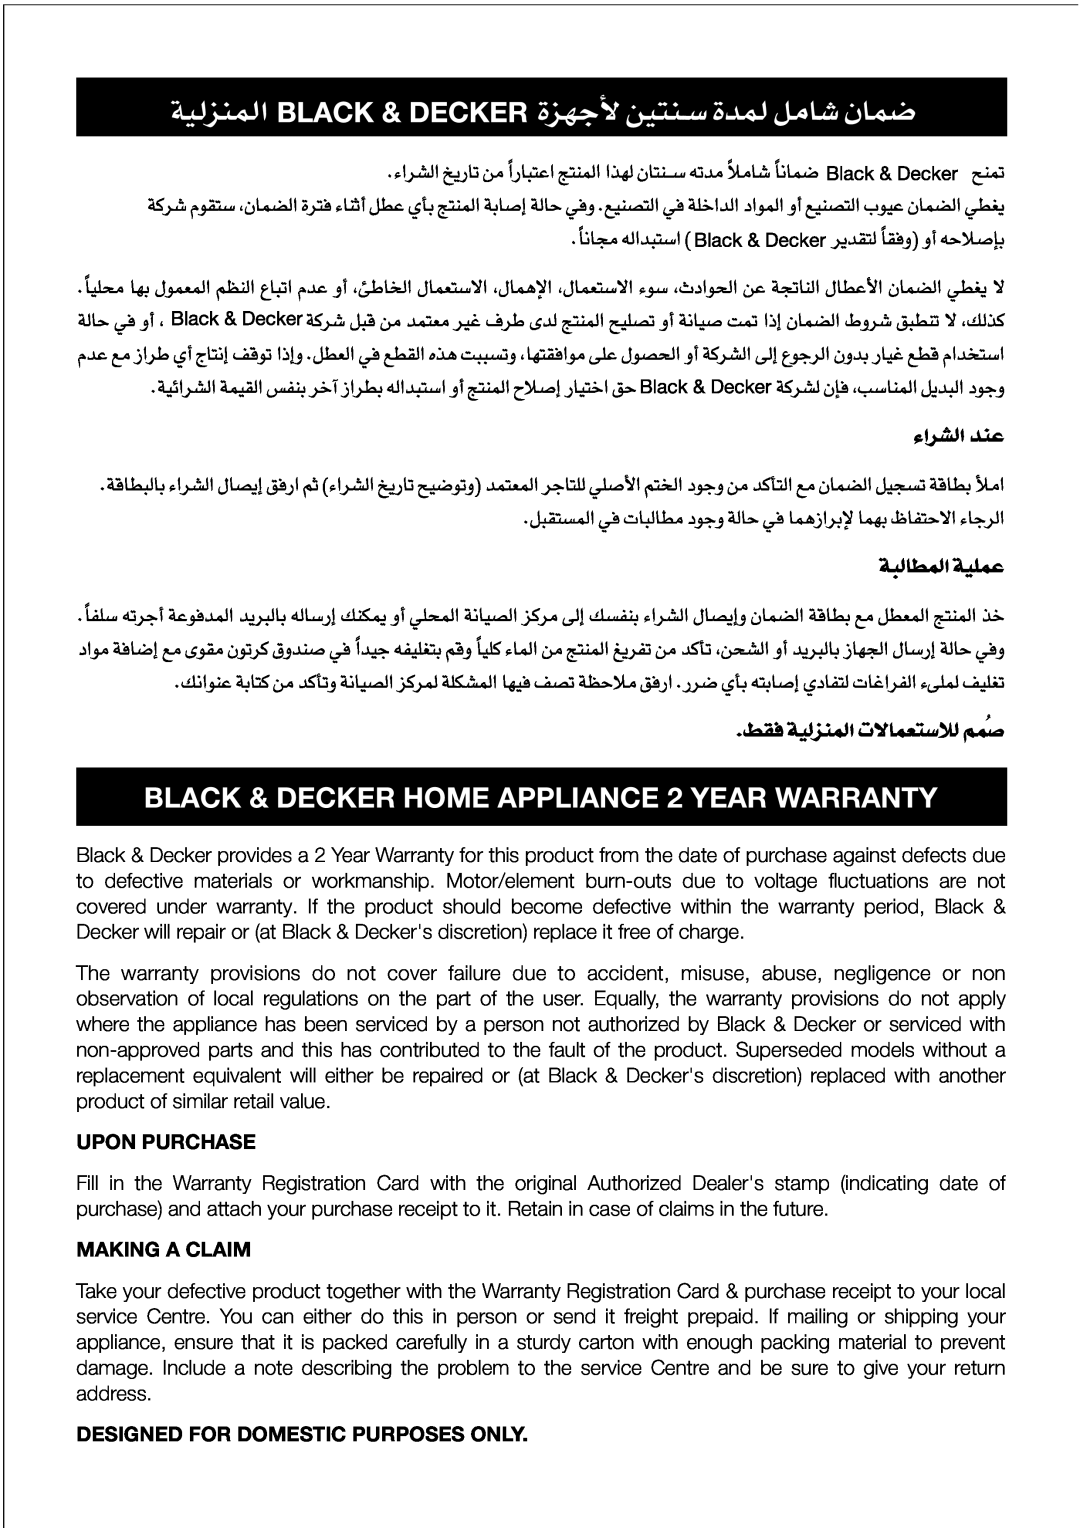 Black & Decker BX200 manual BLACK & DECKER HOME APPLIANCE 2 YEAR WARRANTY, Upon Purchase, Making A Claim 